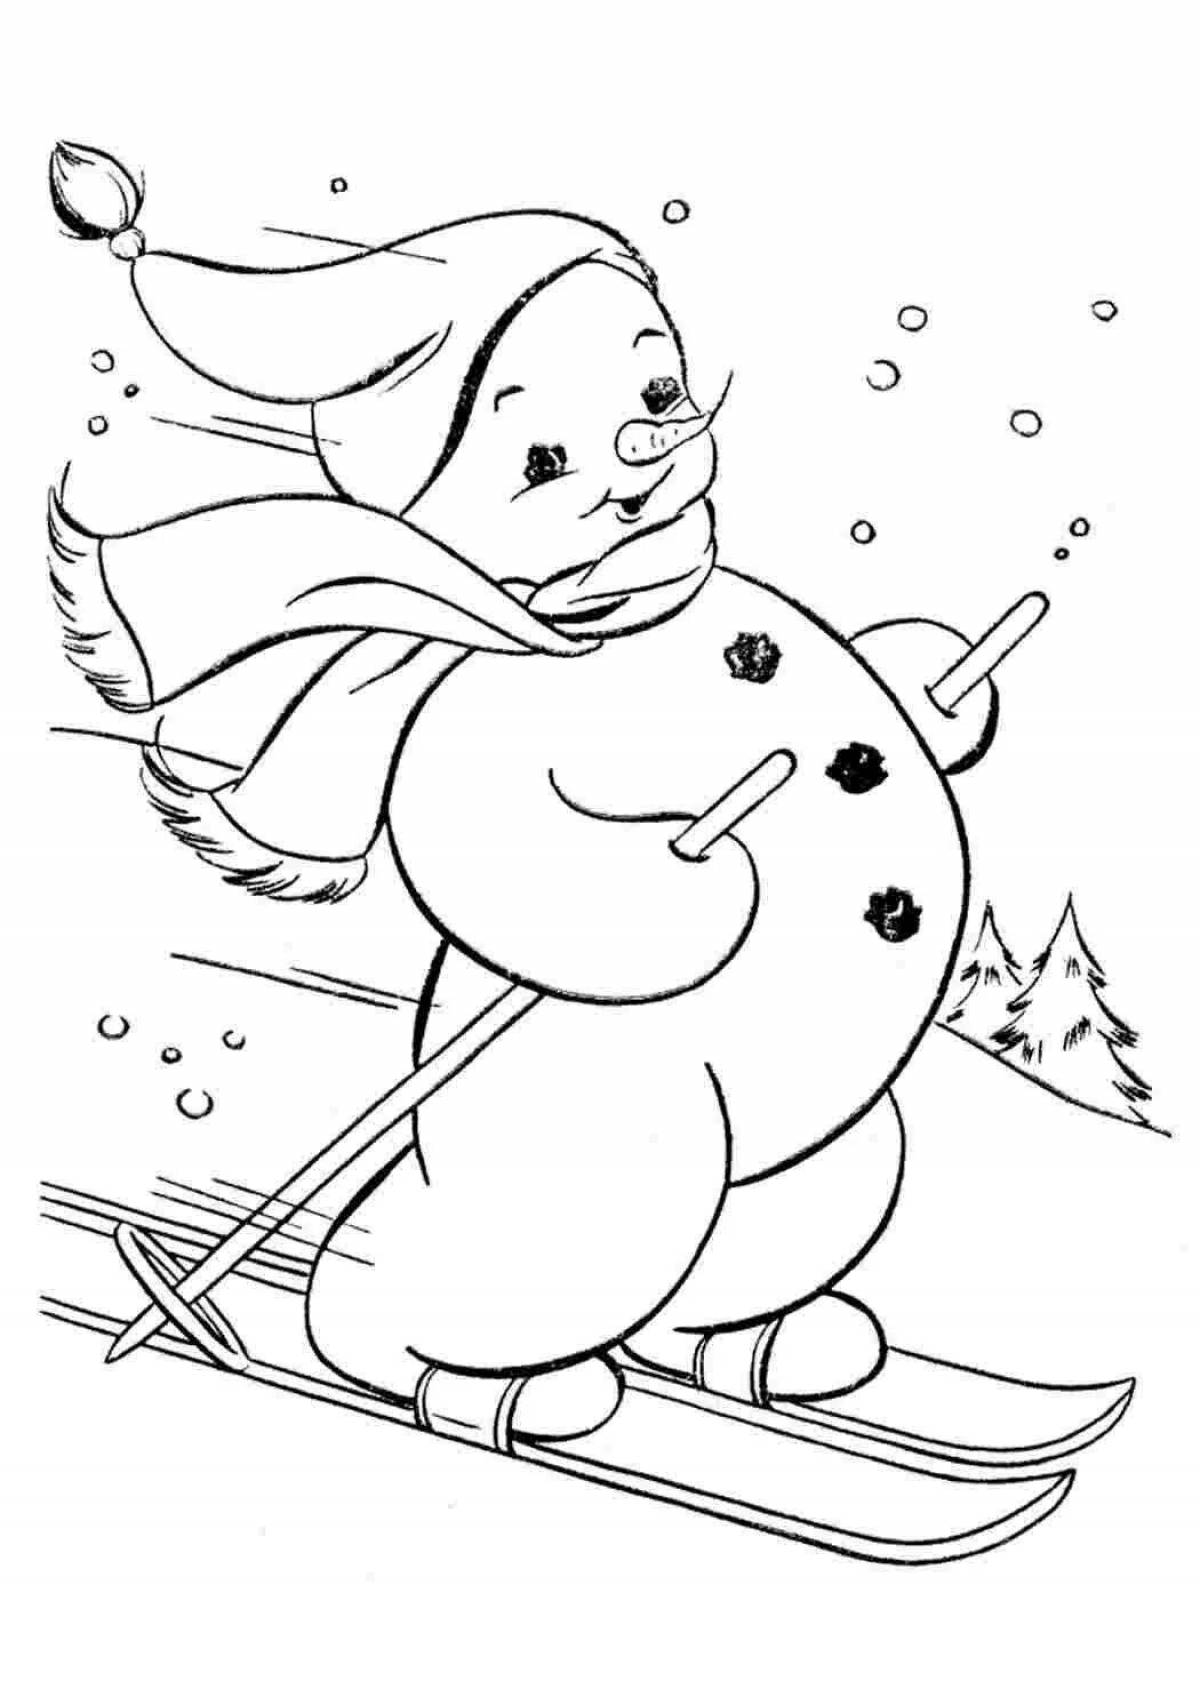 Coloring book shining snowman on a sleigh